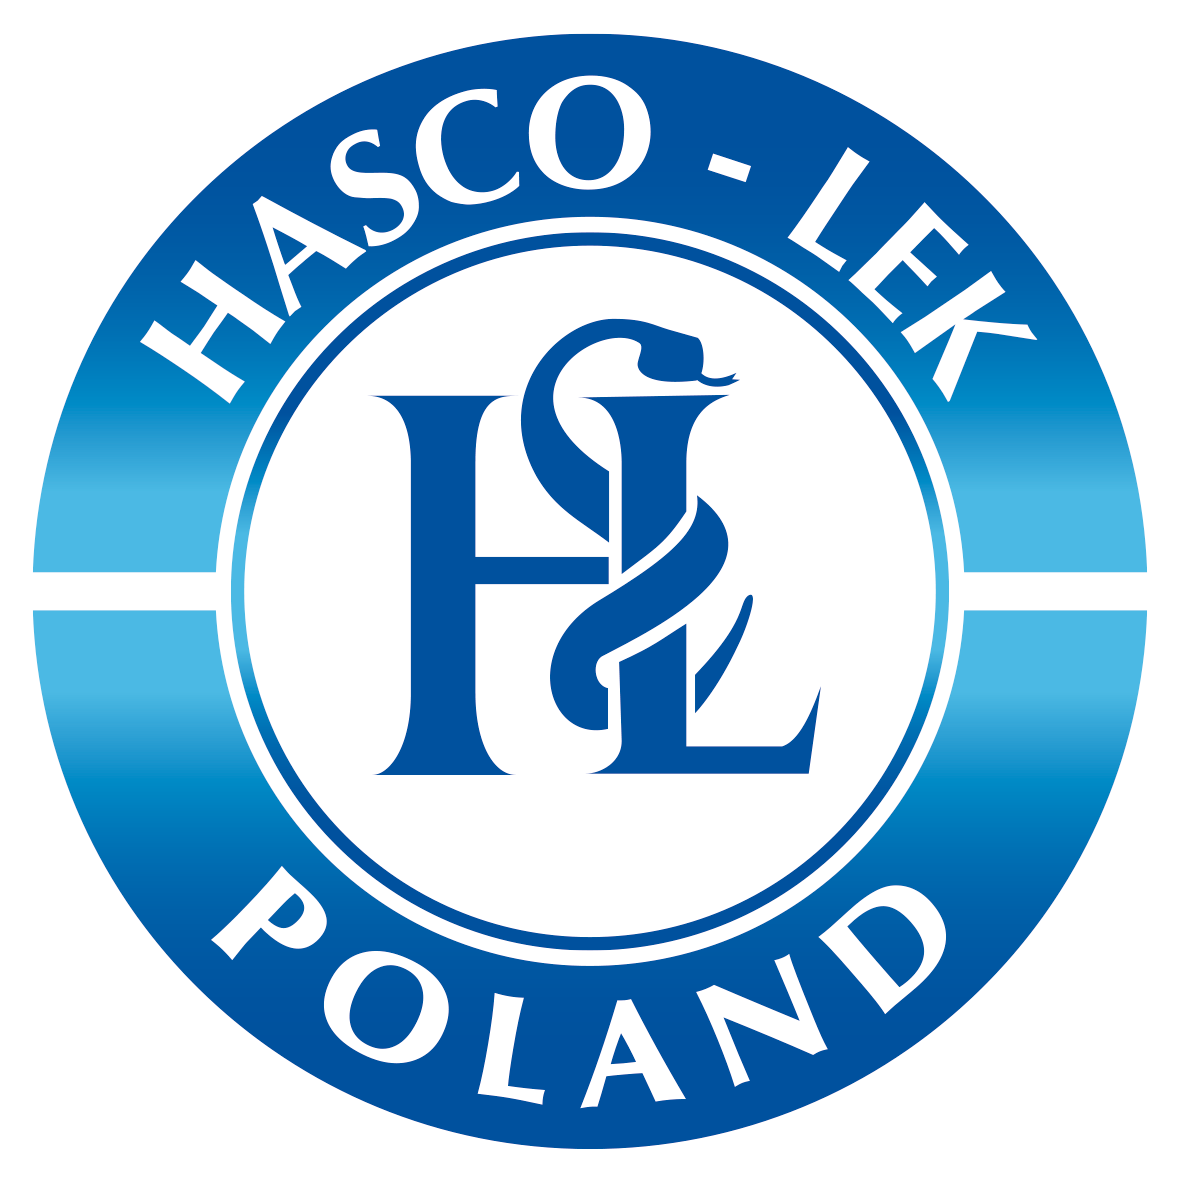 Hasco-Lek S.A.